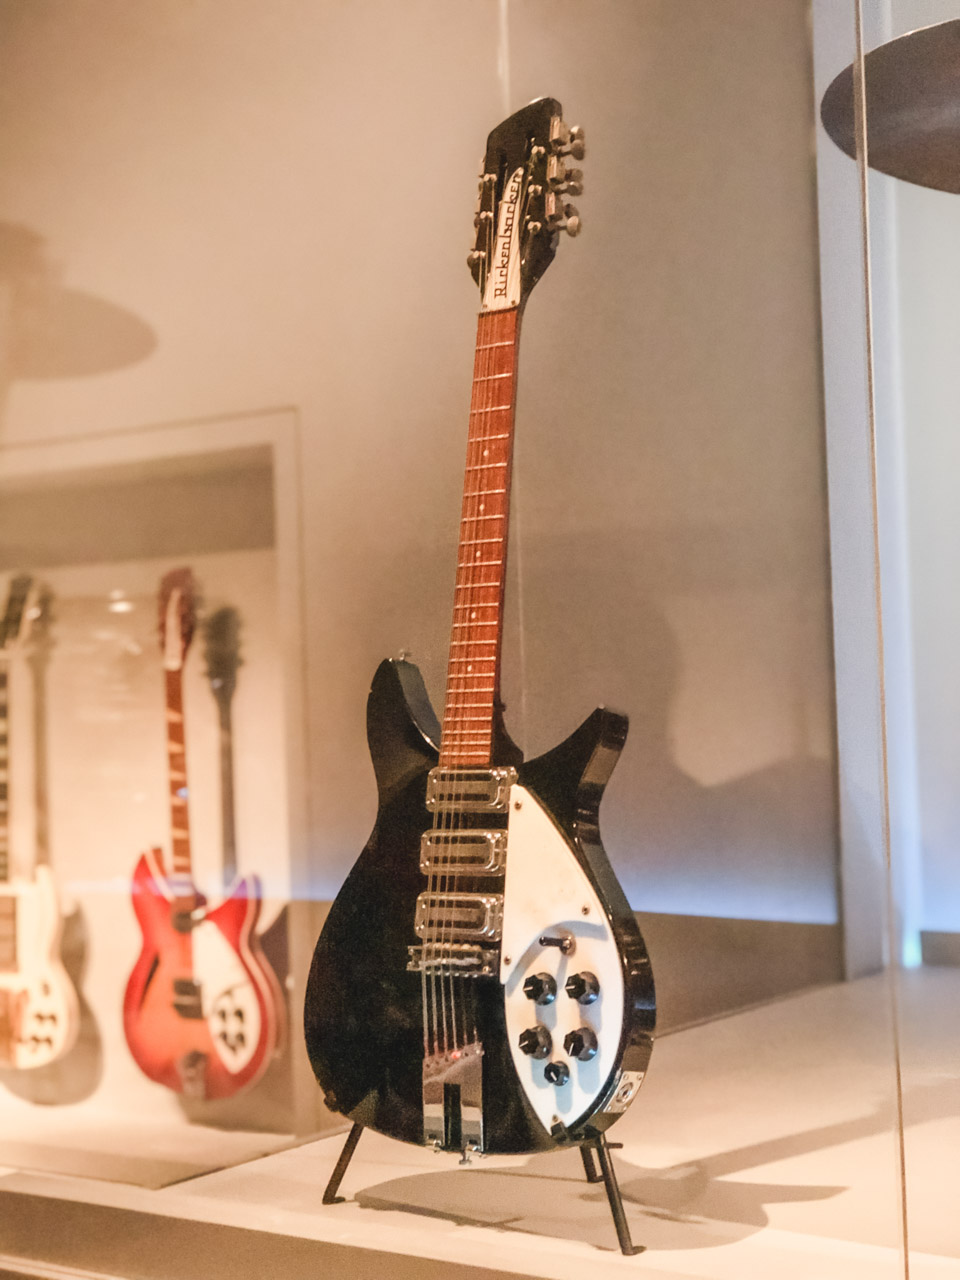 A guitar on display at The Met